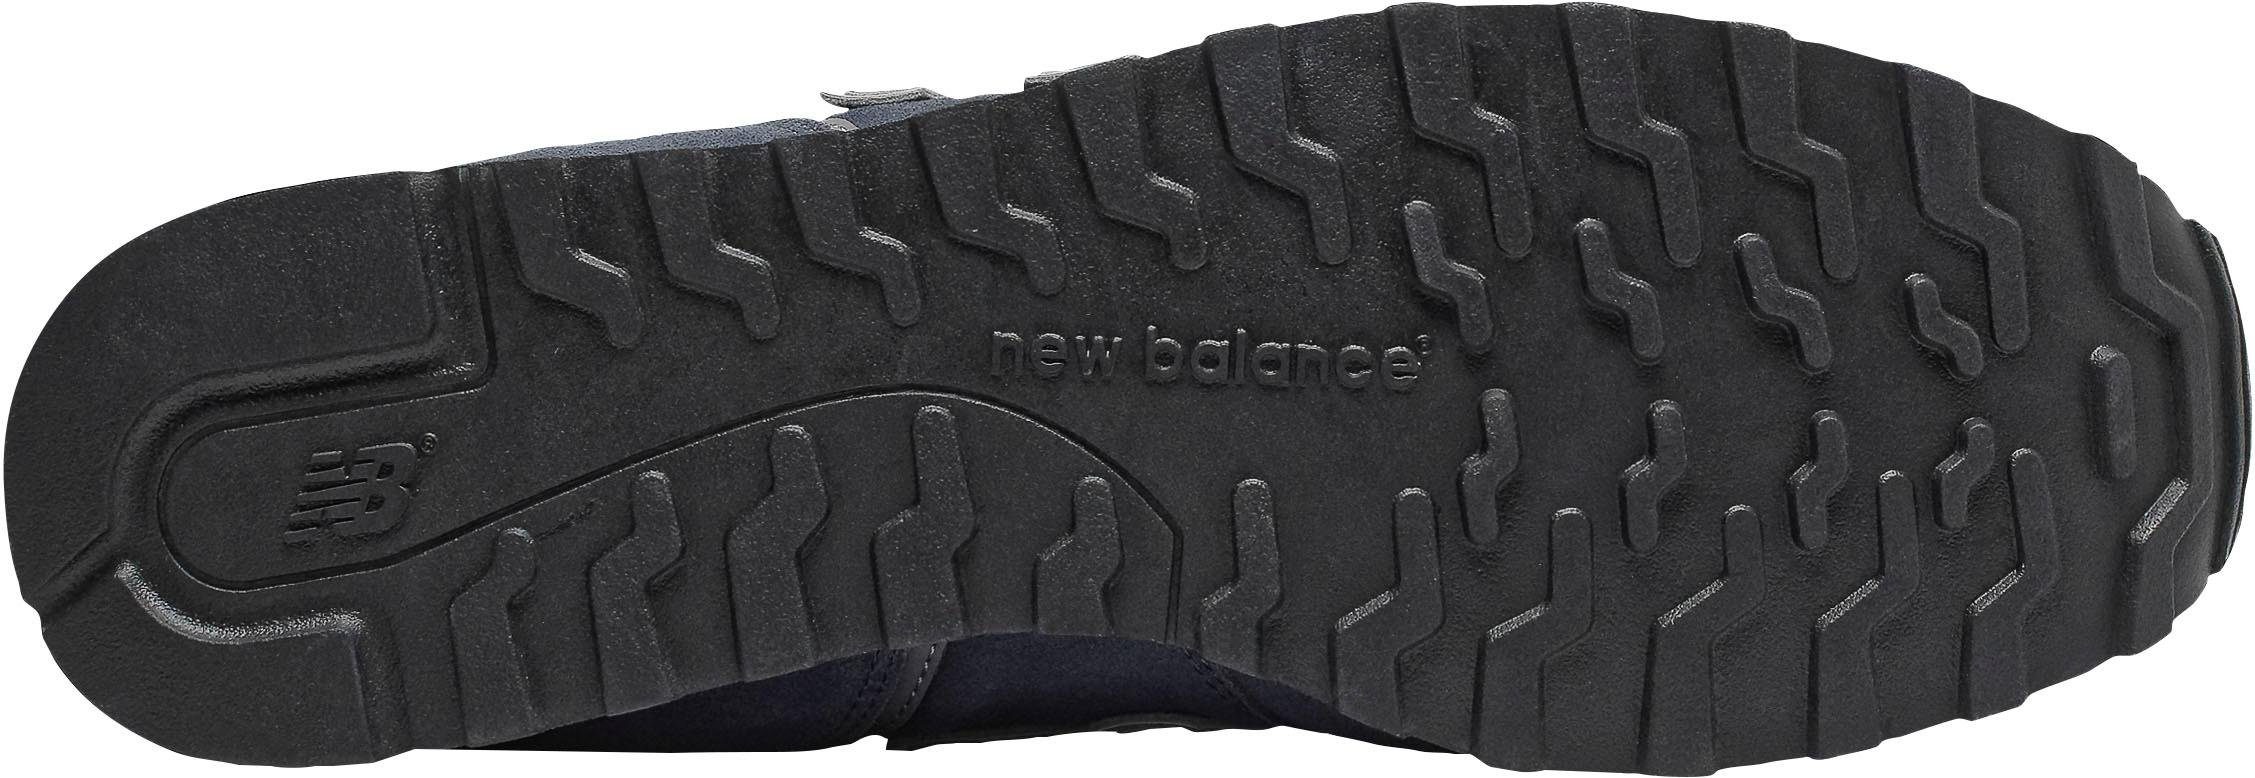 New Balance ML 373 Sneaker navy